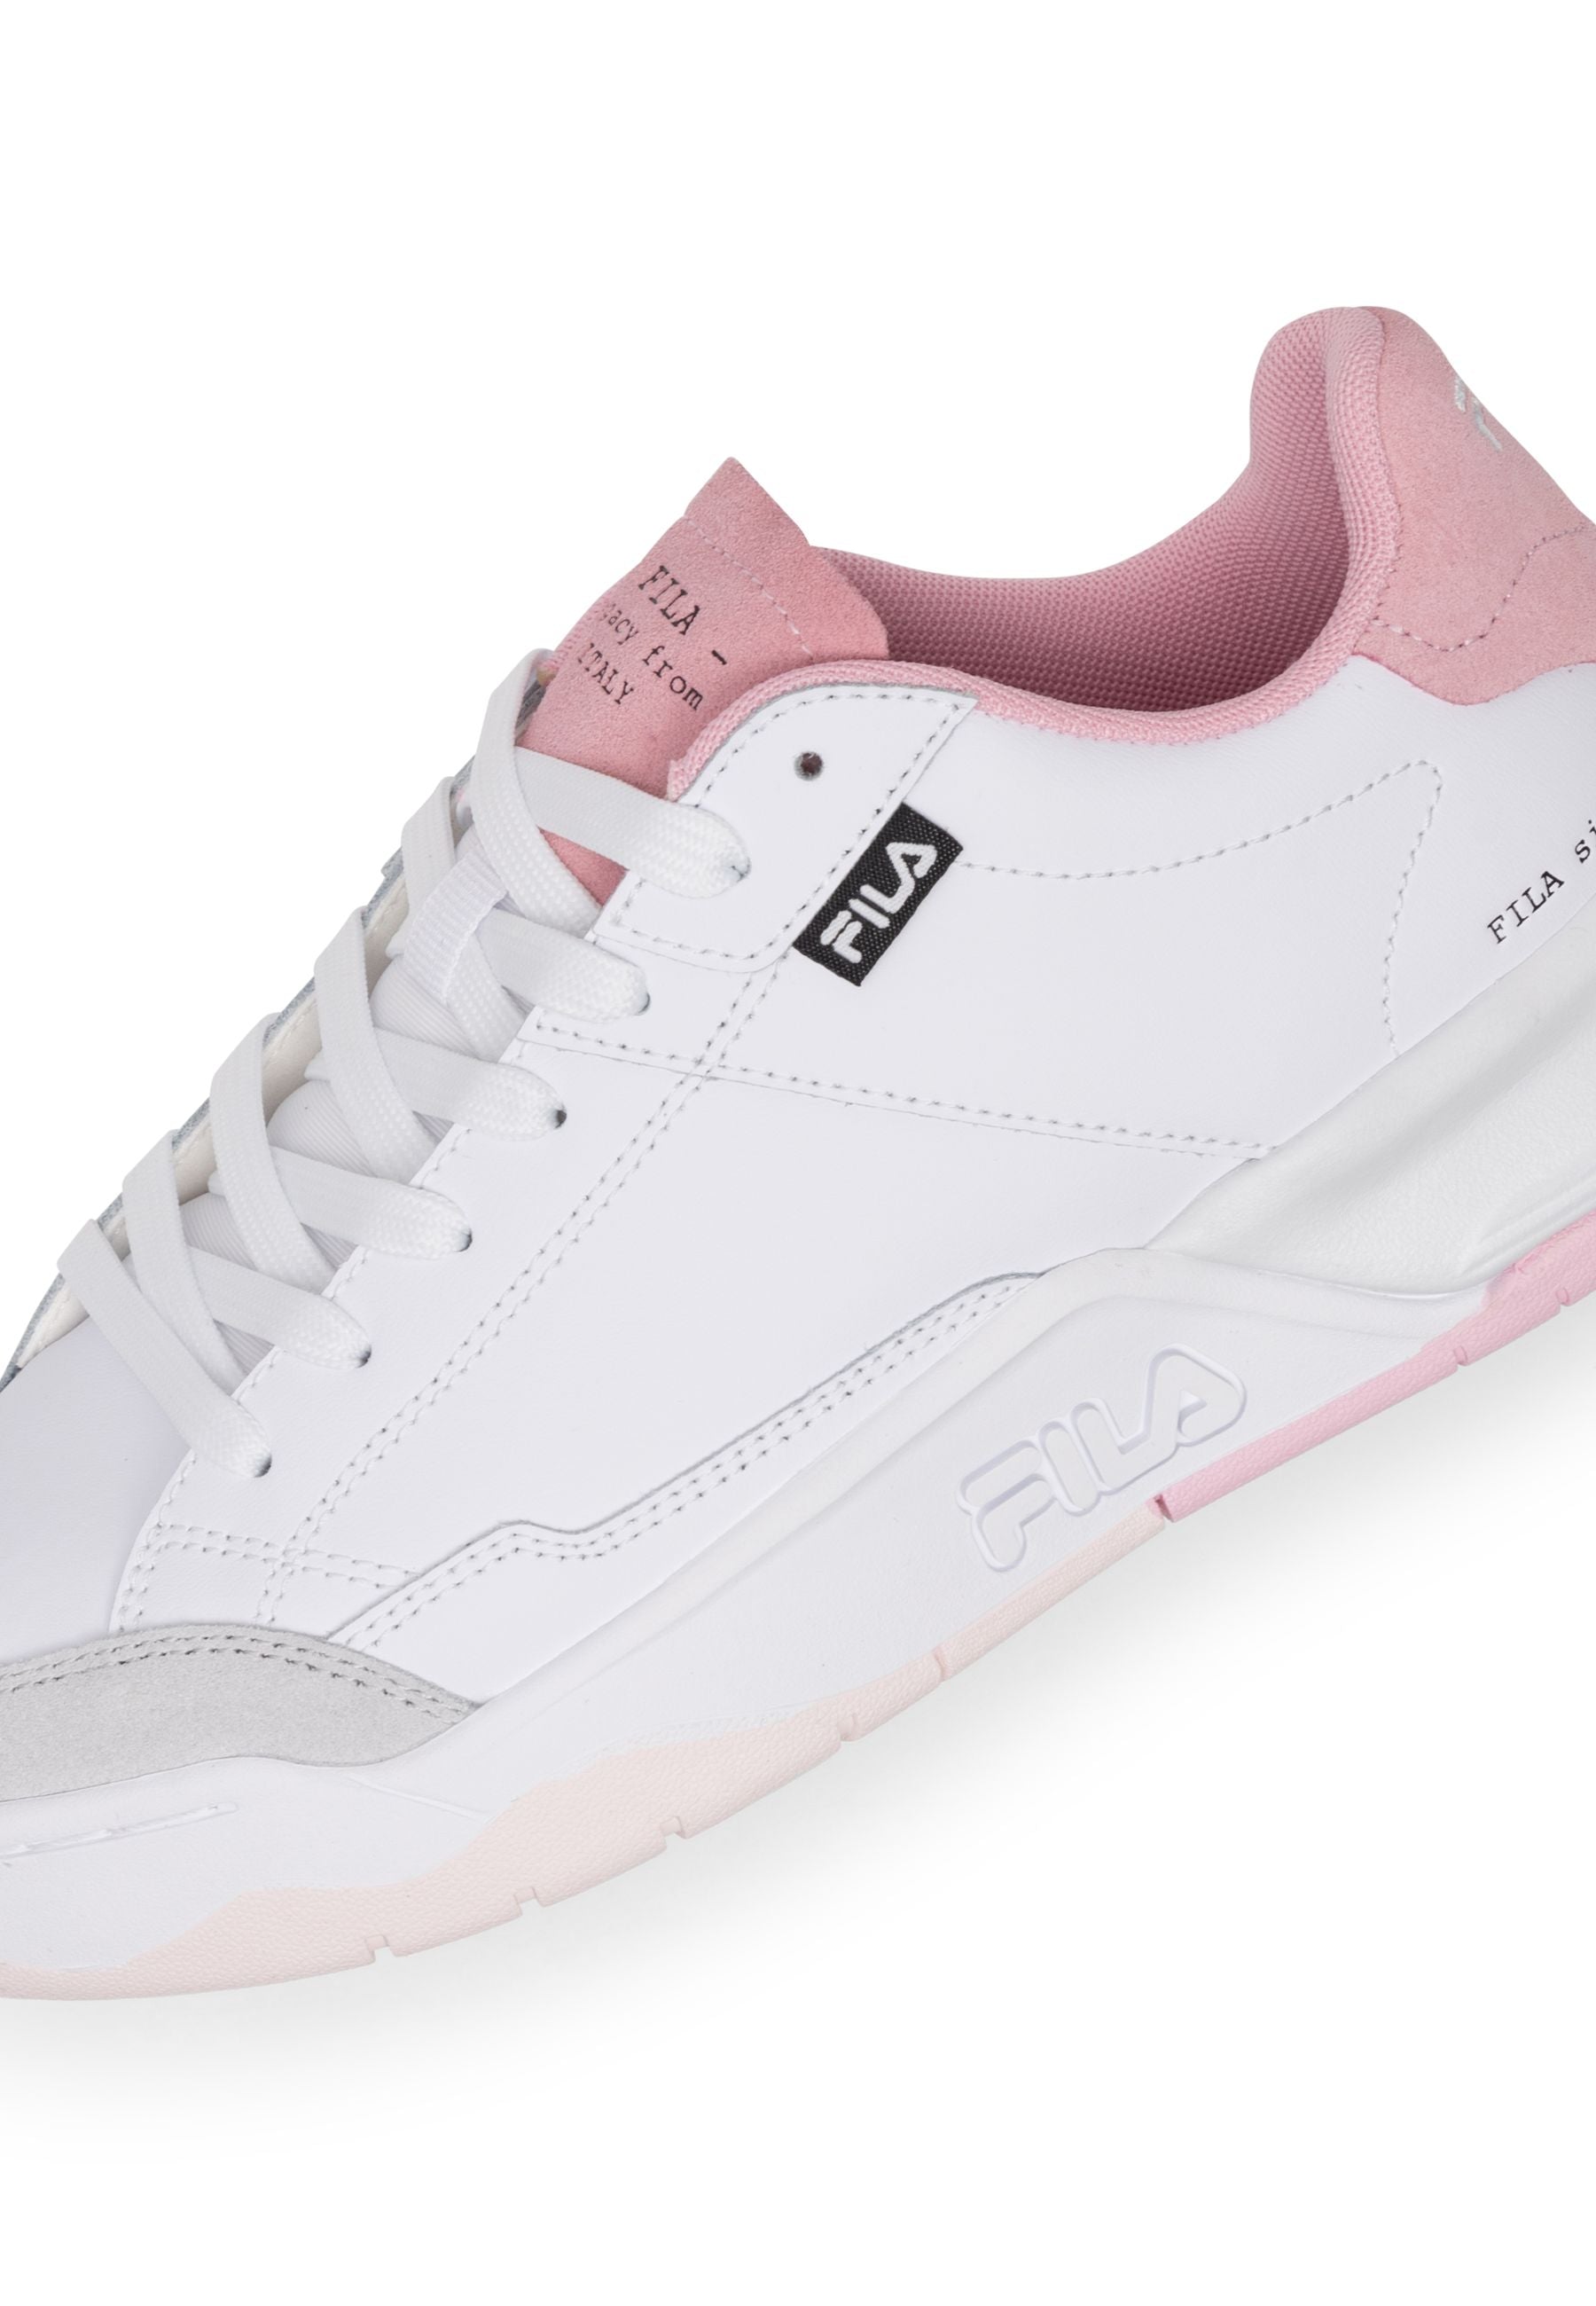 Fila Avenida Wmn in White-Pink Nectar Sneakers Fila   